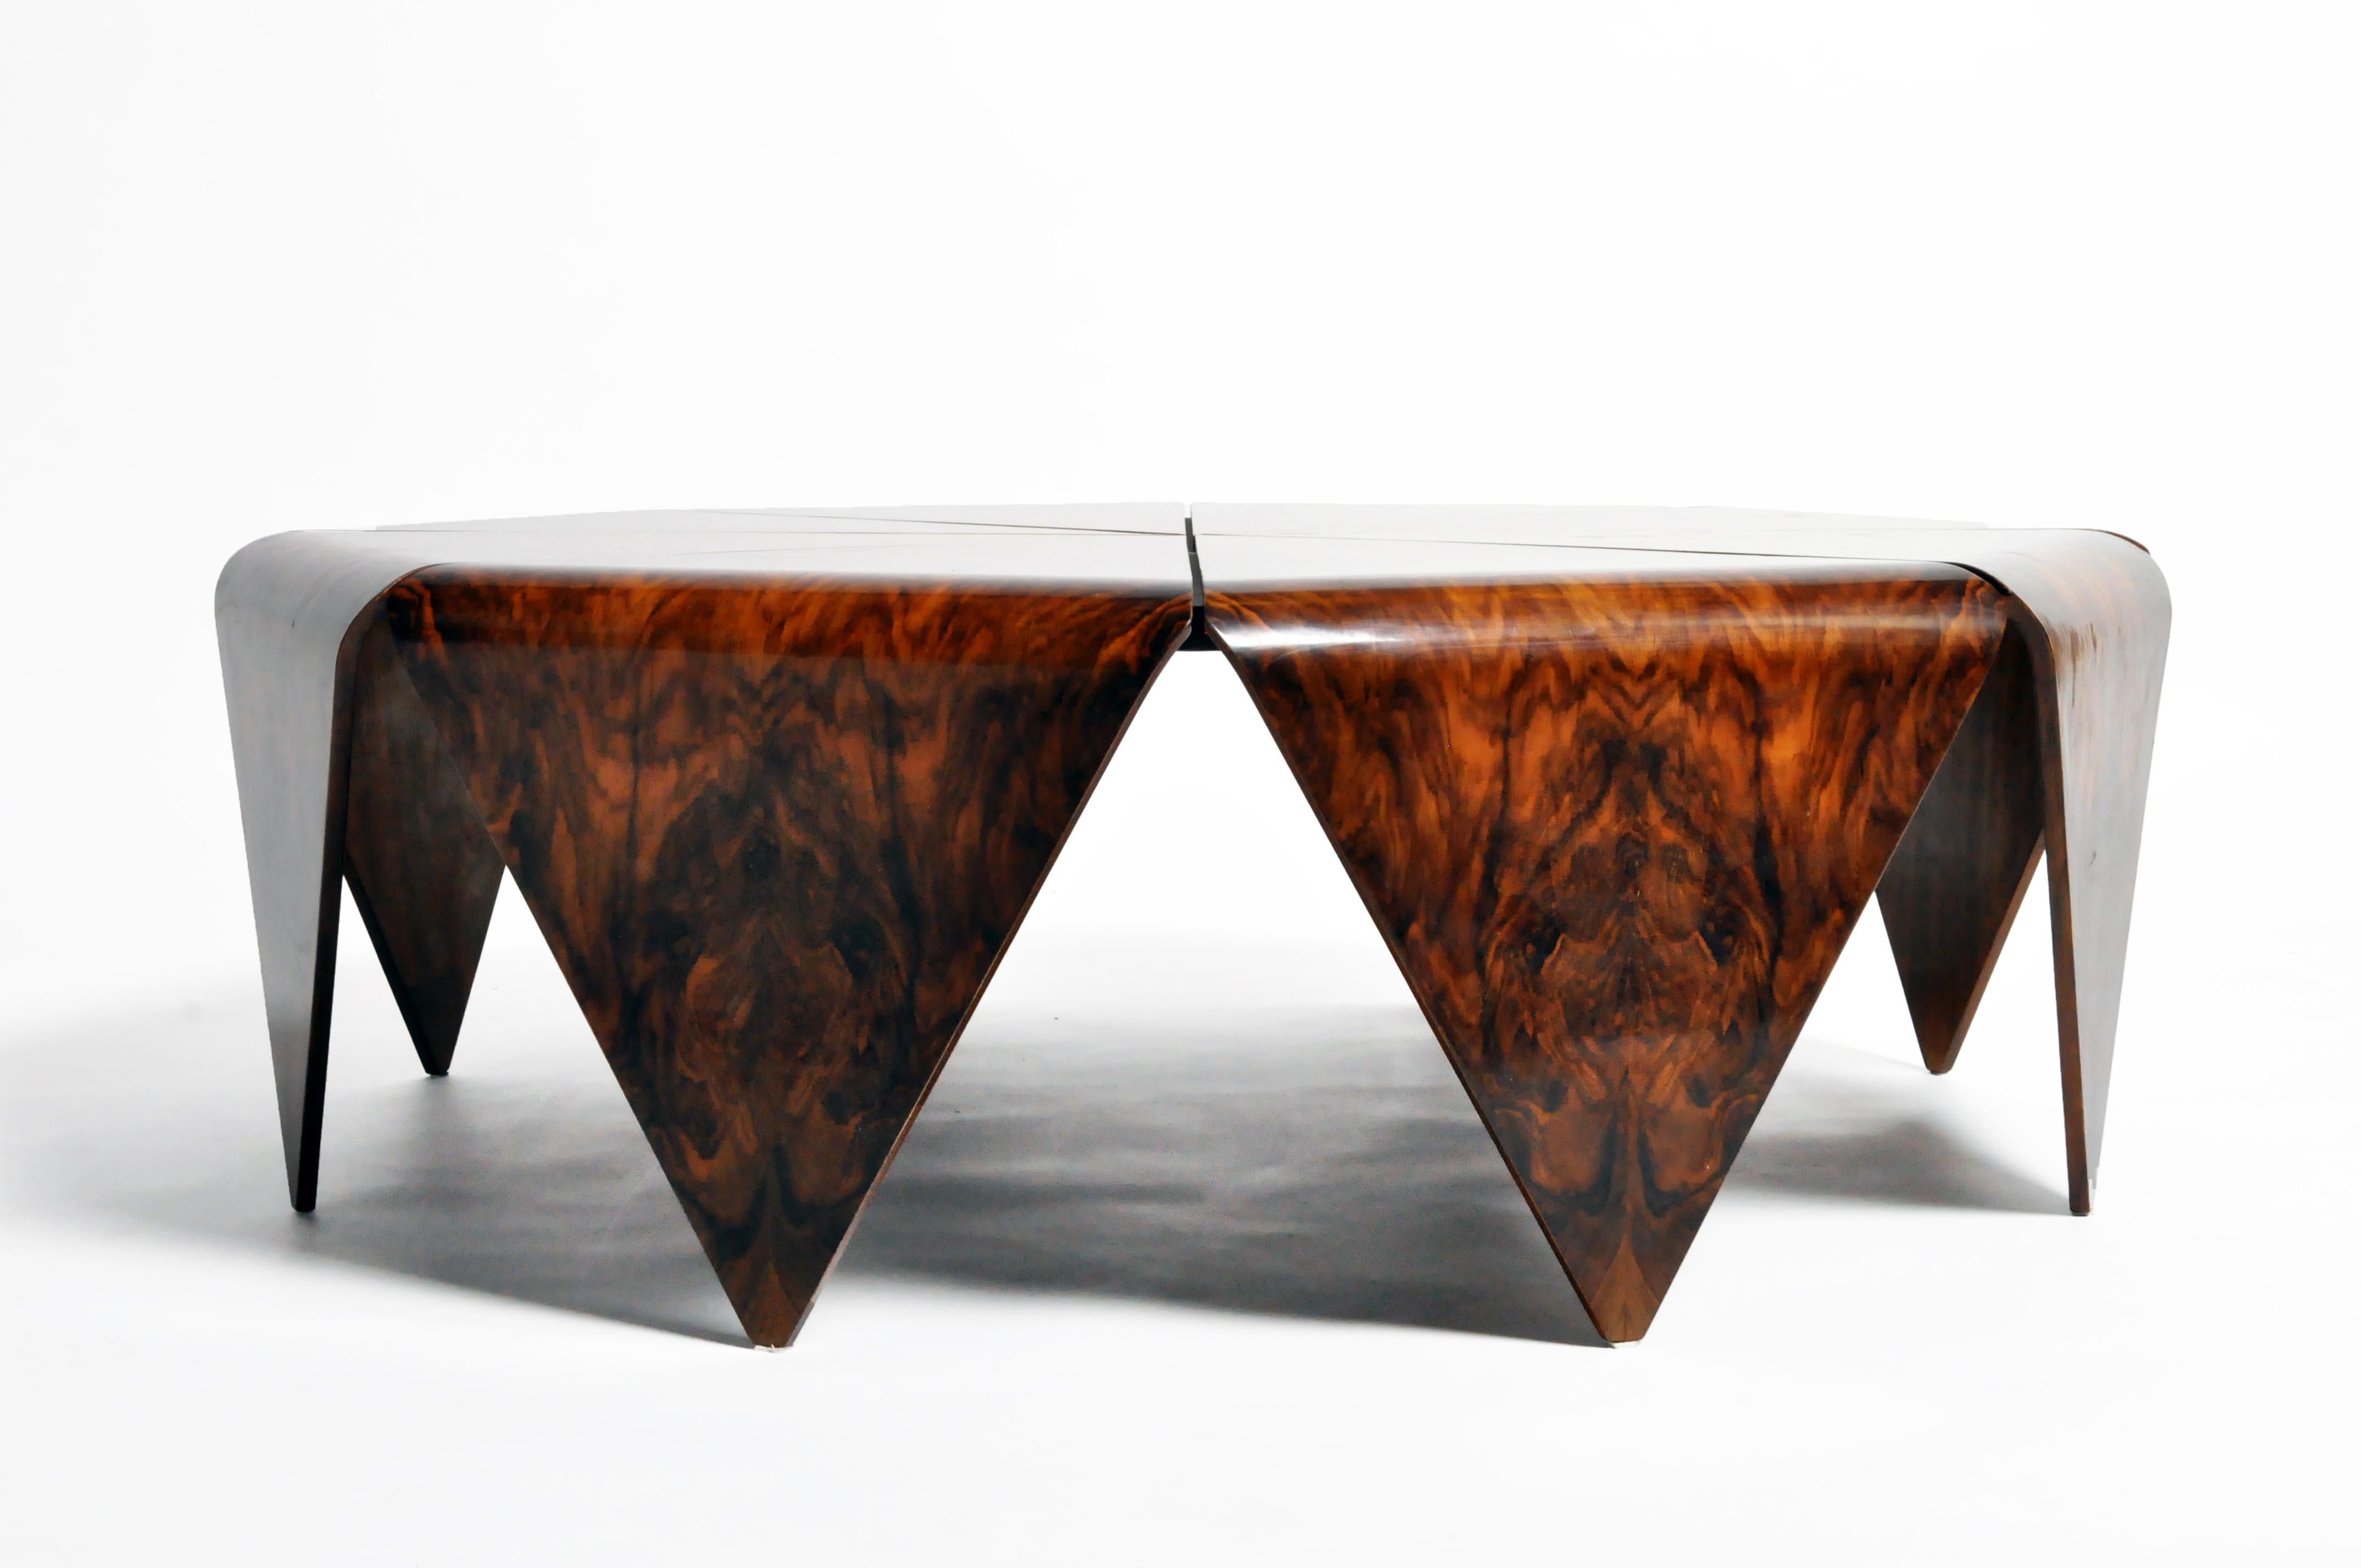 Impressive octagonal coffee table from Hungary made from walnut veneer, circa 1960s.